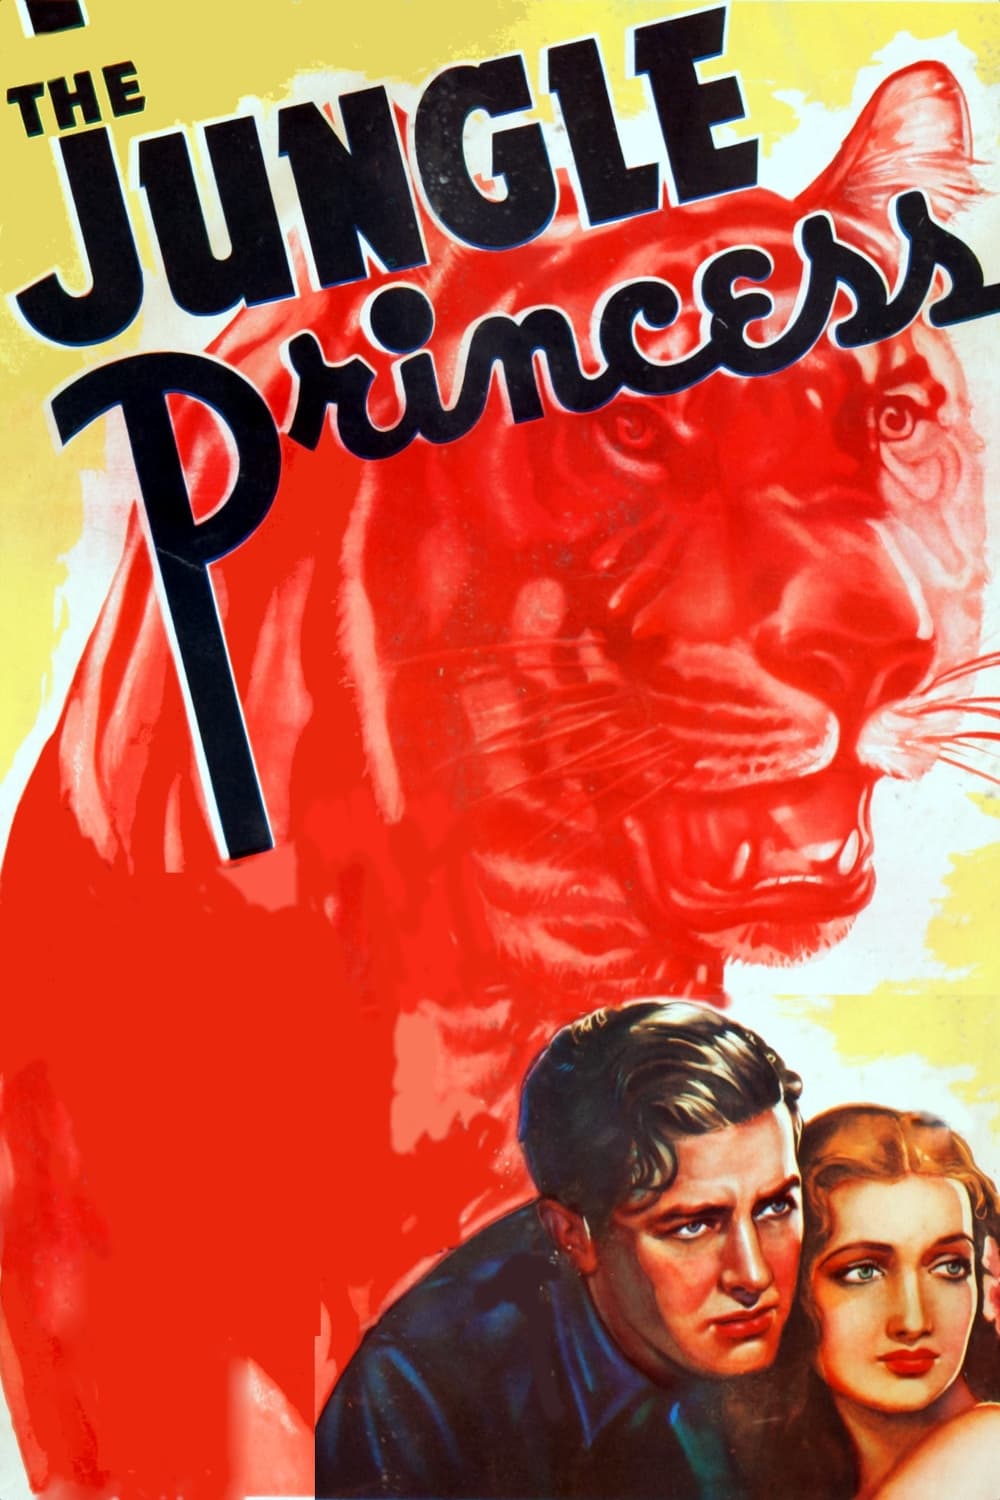 The Jungle Princess (1936)